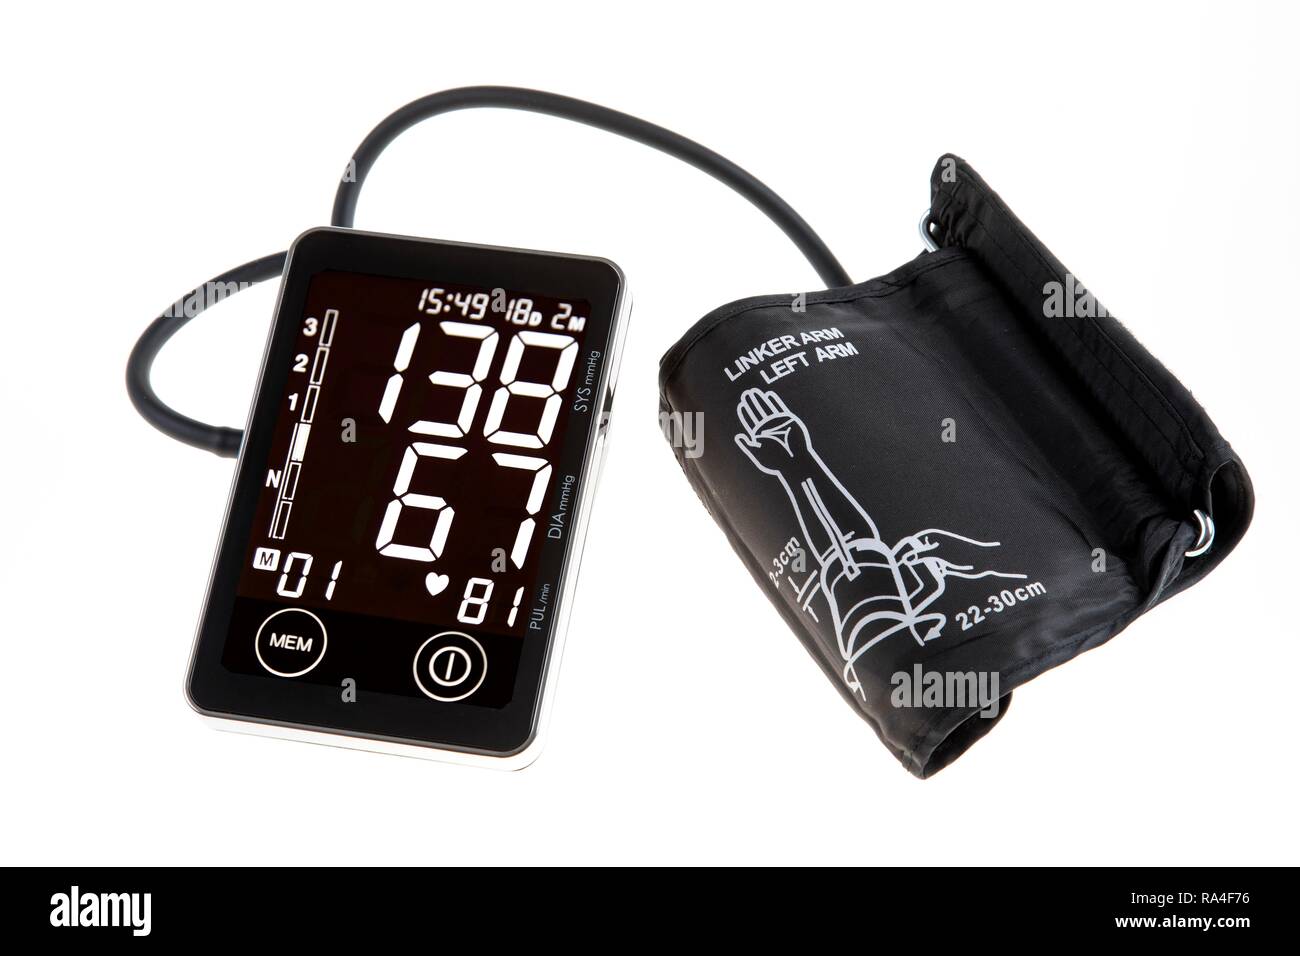 Blood pressure monitor, digital display, upper arm cuff, for self-measurement Stock Photo